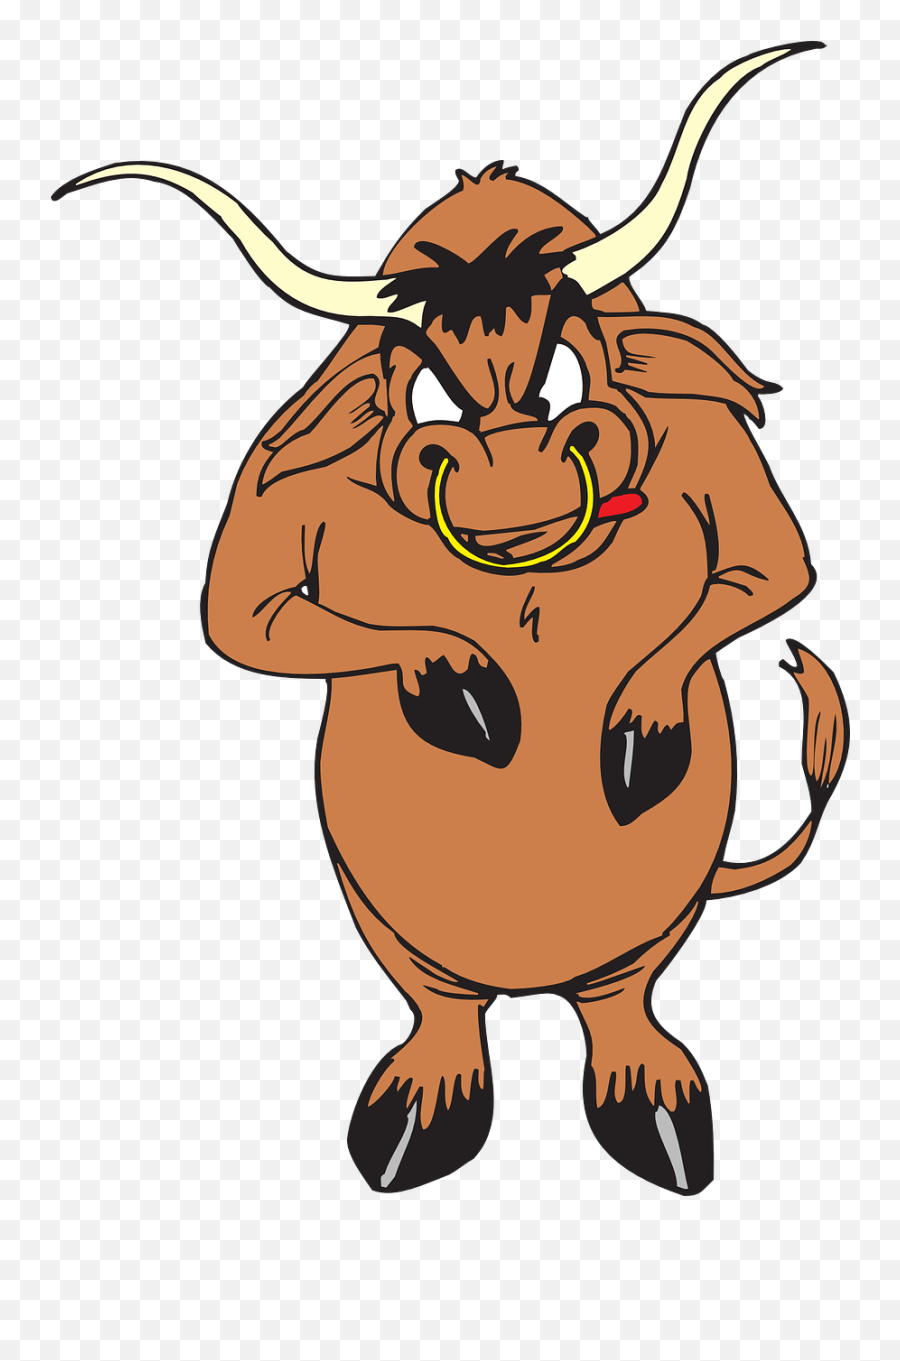 Bull Angry Lips - Free Vector Graphic On Pixabay Bull With Nose Ring Cartoon Emoji,Bull Emoji